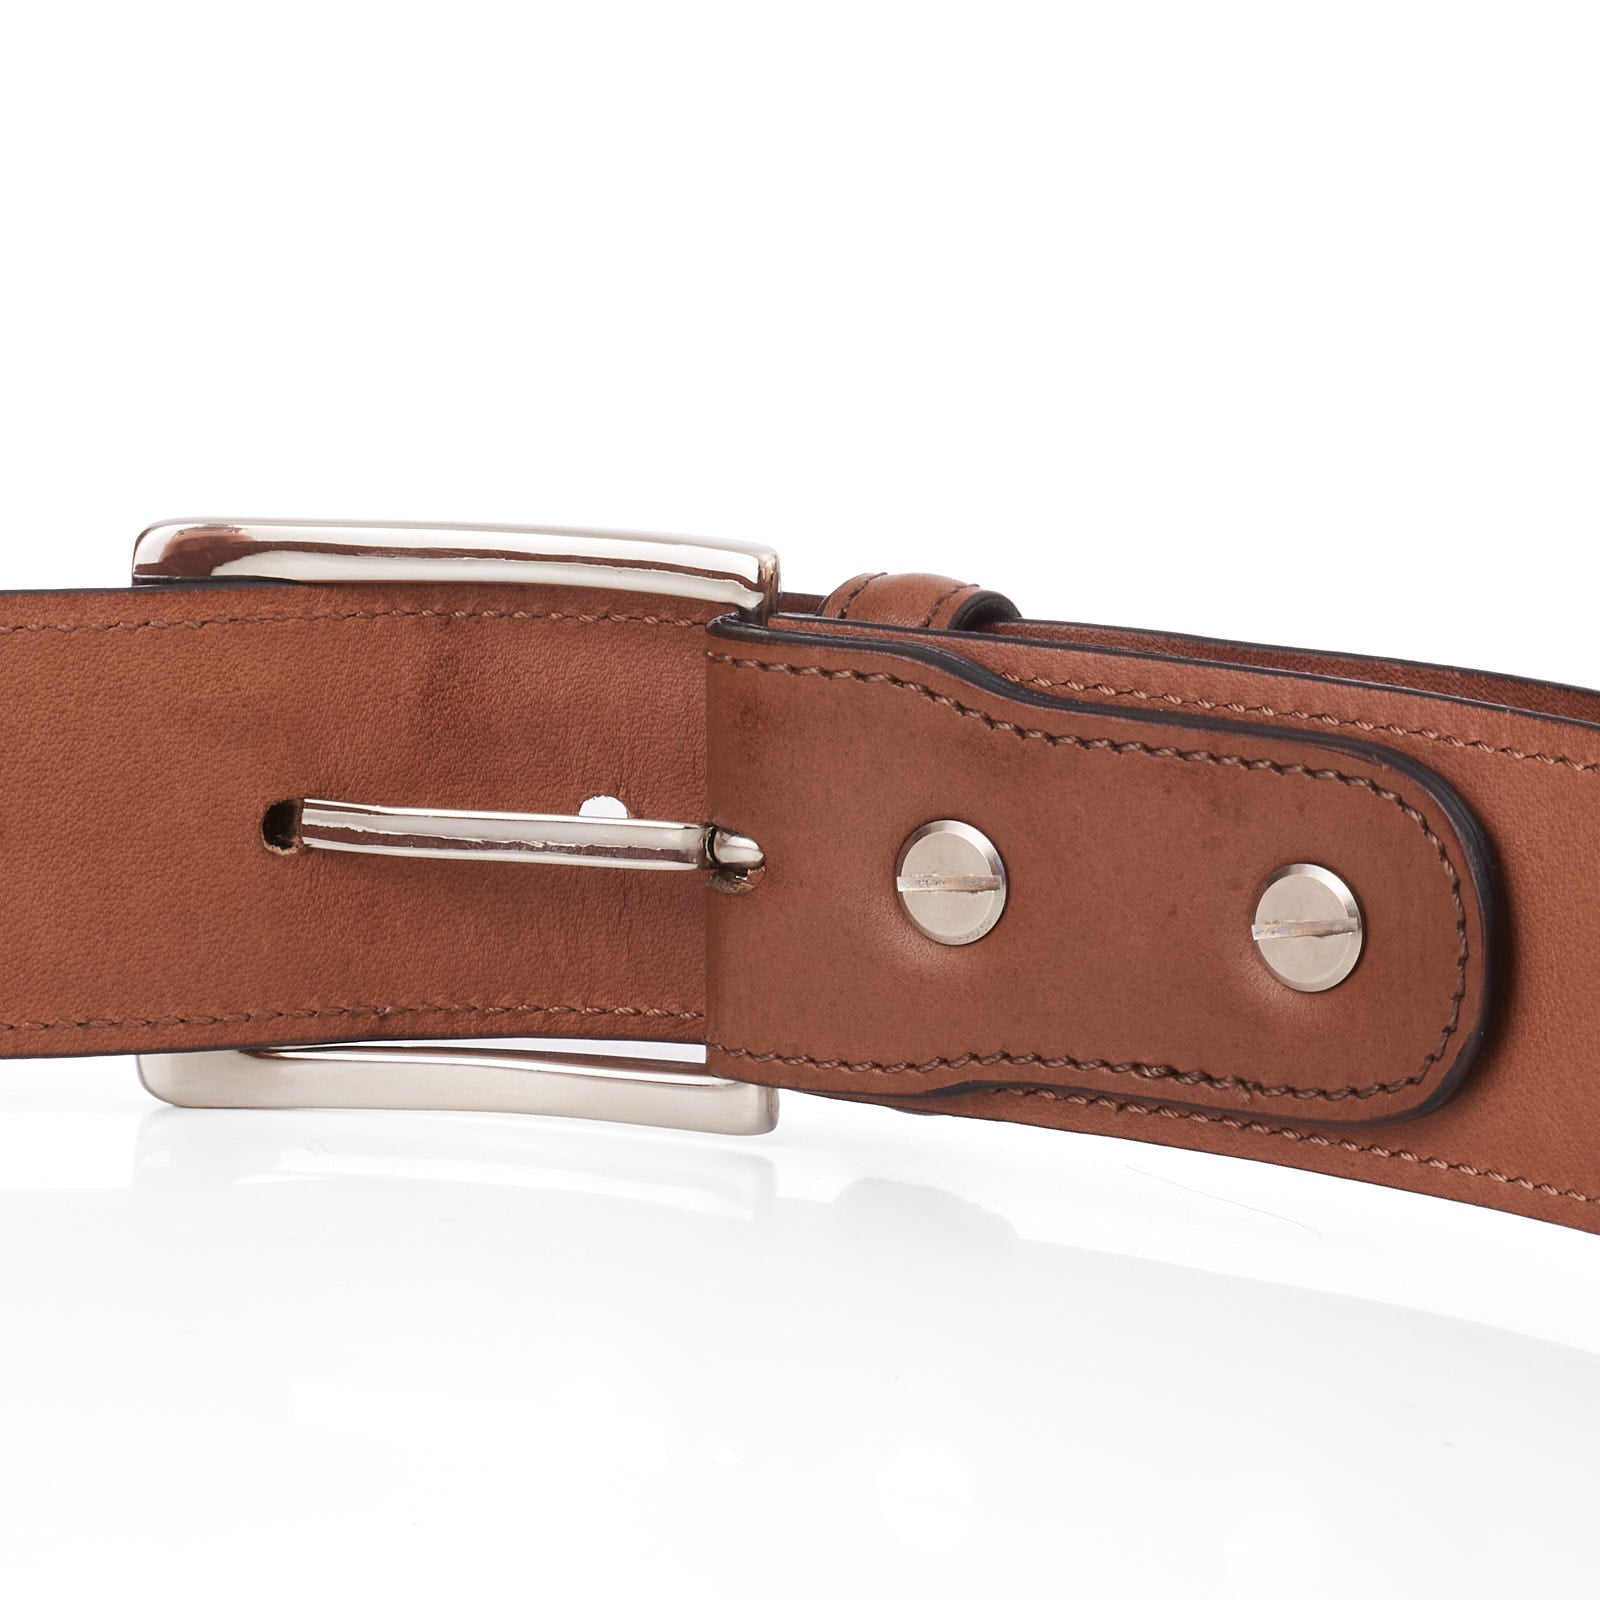 EDWARD GREEN Handmade Brown Leather Belt with Silver-Tone Buckle 90cm 36" EDWARD GREEN